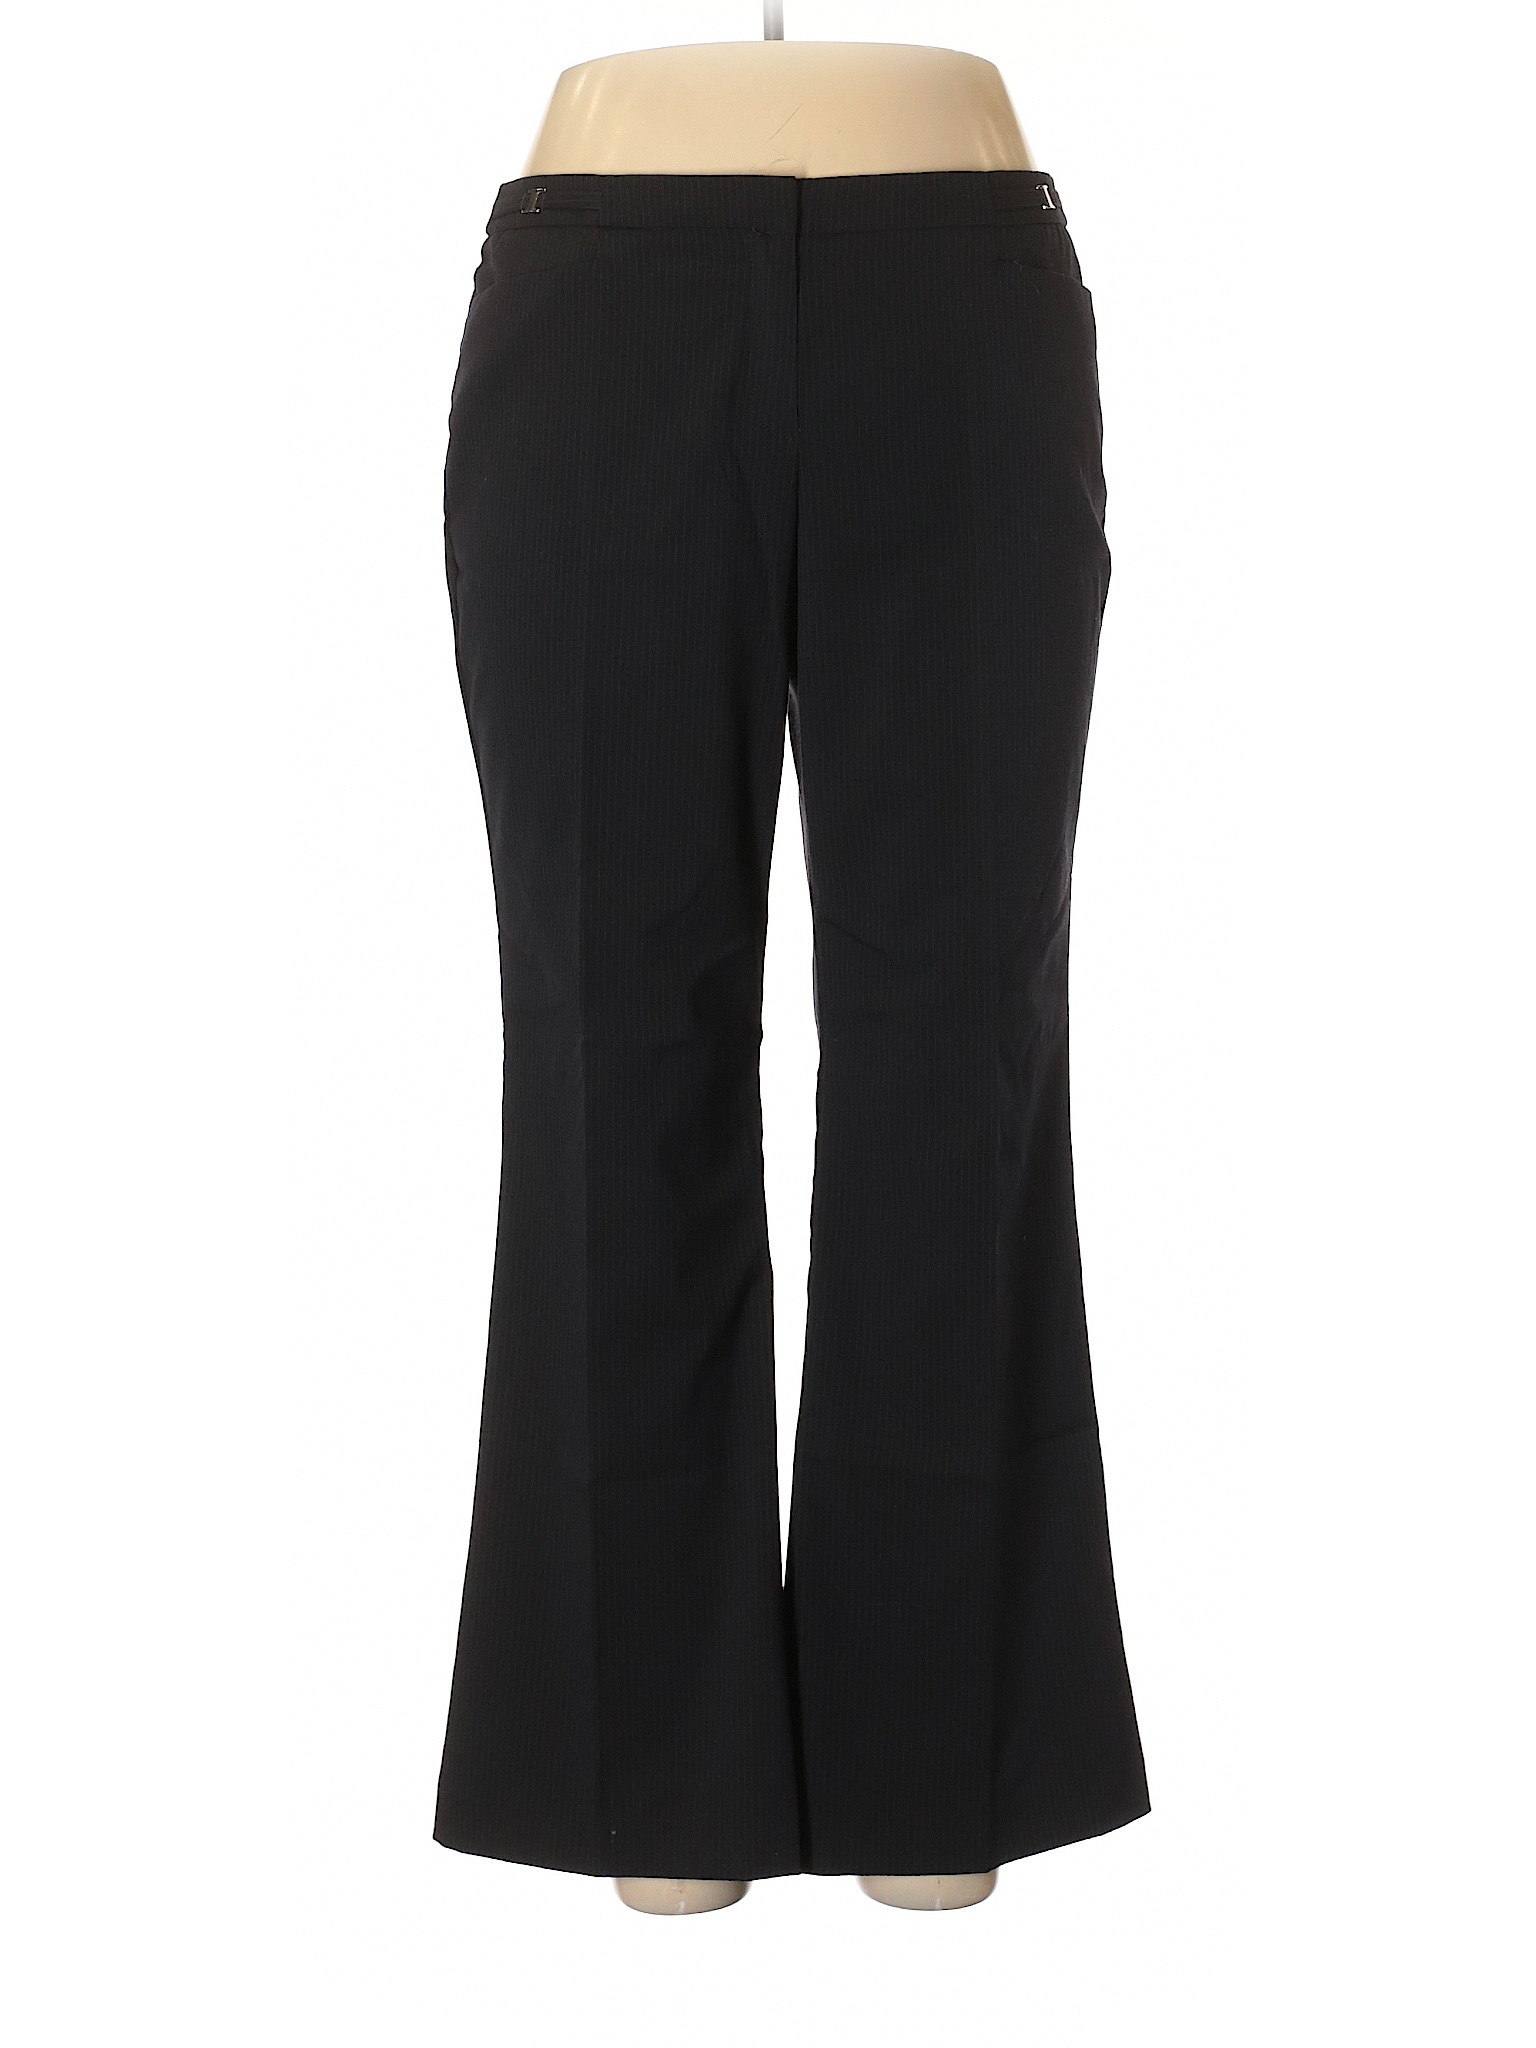 New York & Company Women Black Dress Pants 14 Petites | eBay